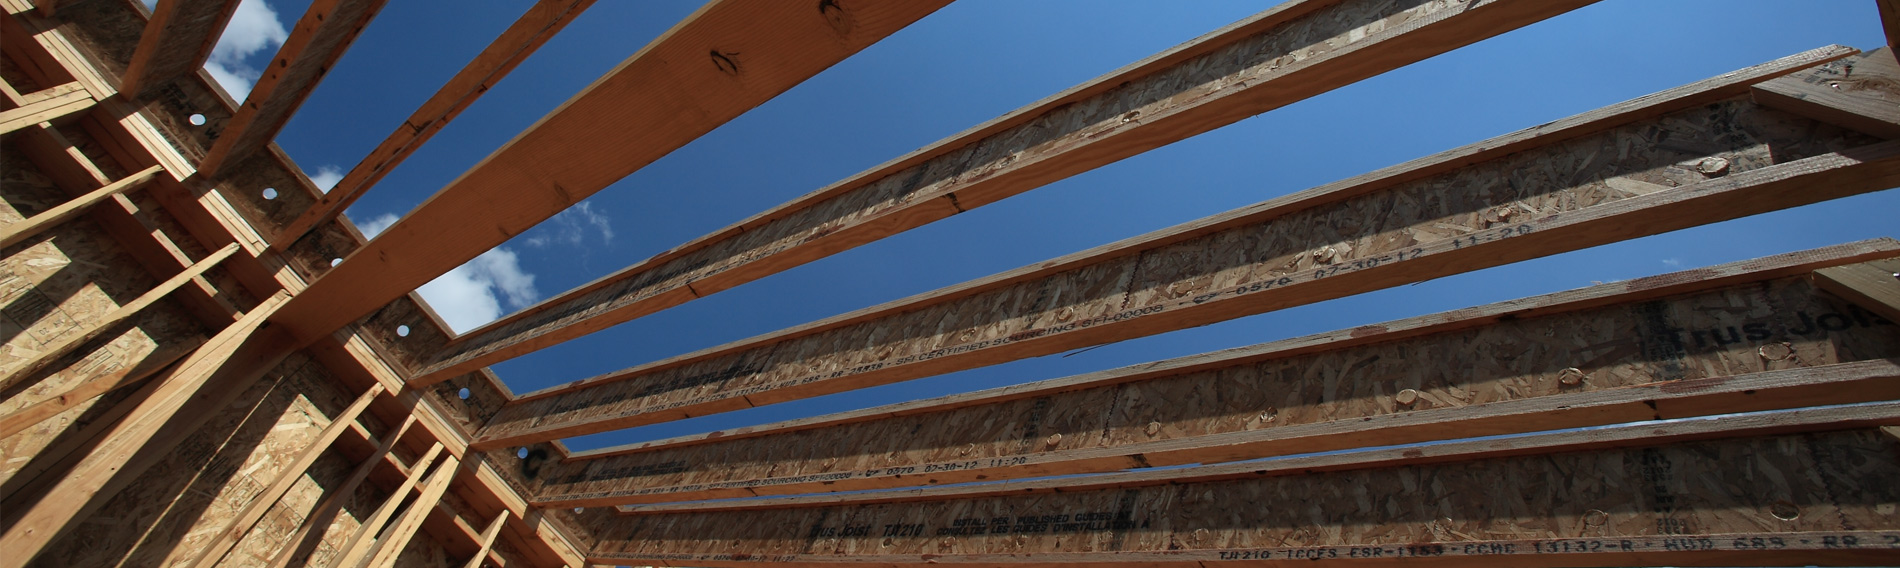 Framing Lumber, I-Joist, LVL, OSB & Siding - Mid-America Lumber